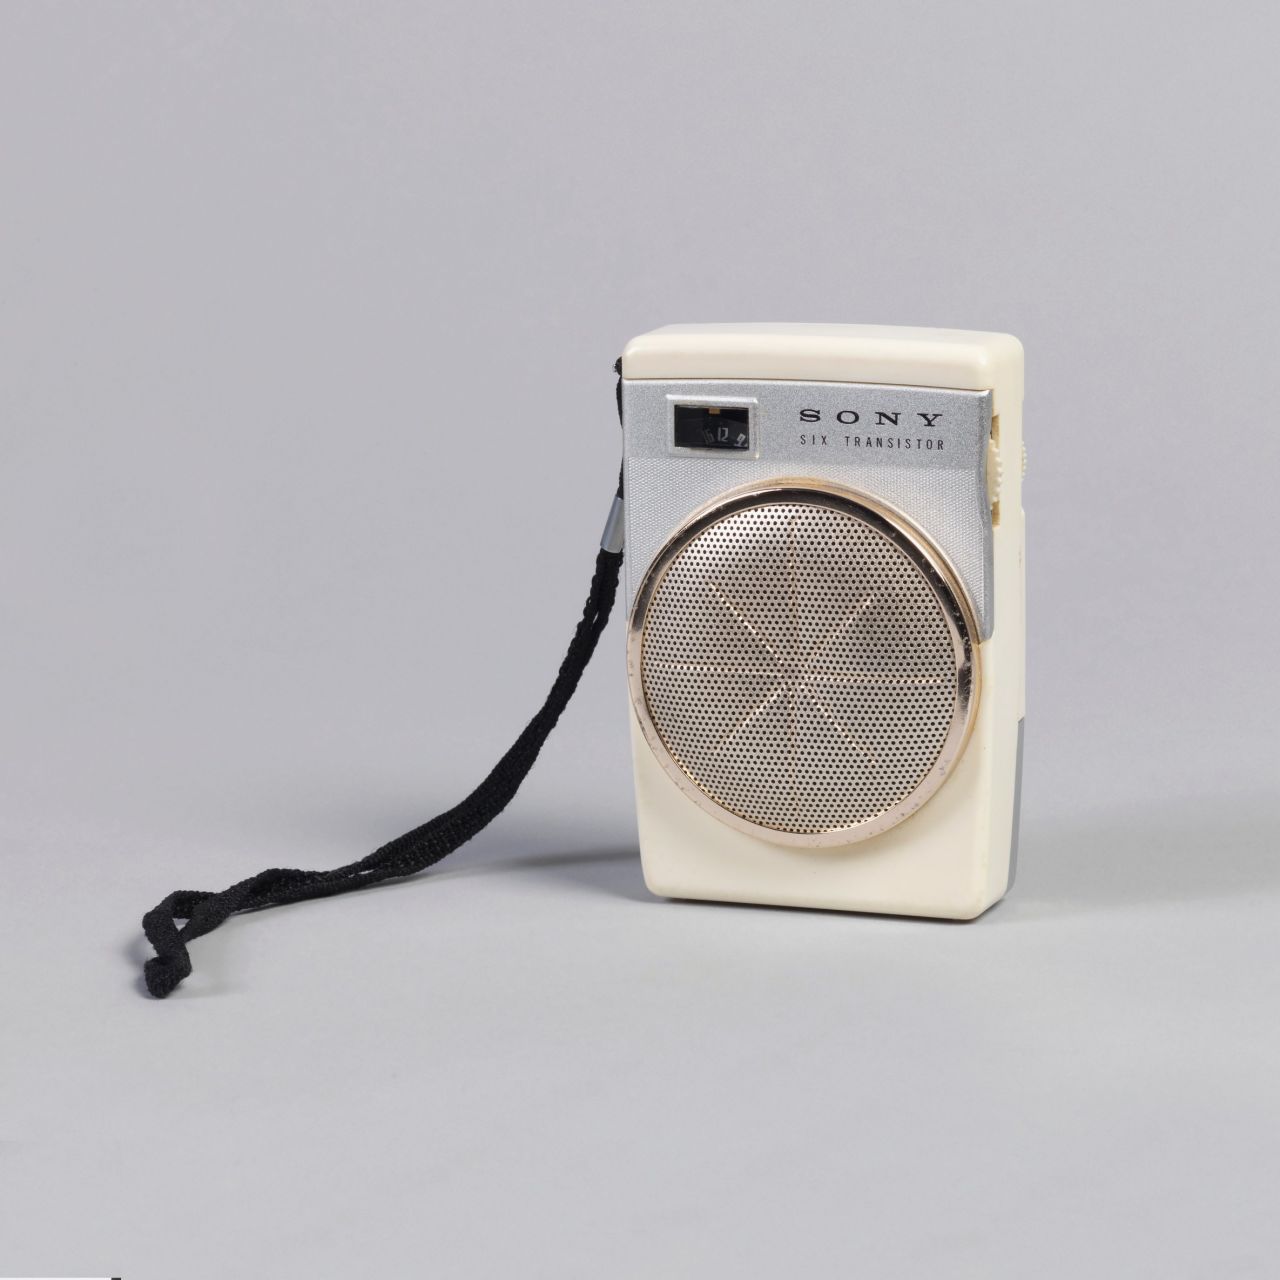 TR-620 Portable Radio (1960) by Sony Corporation.